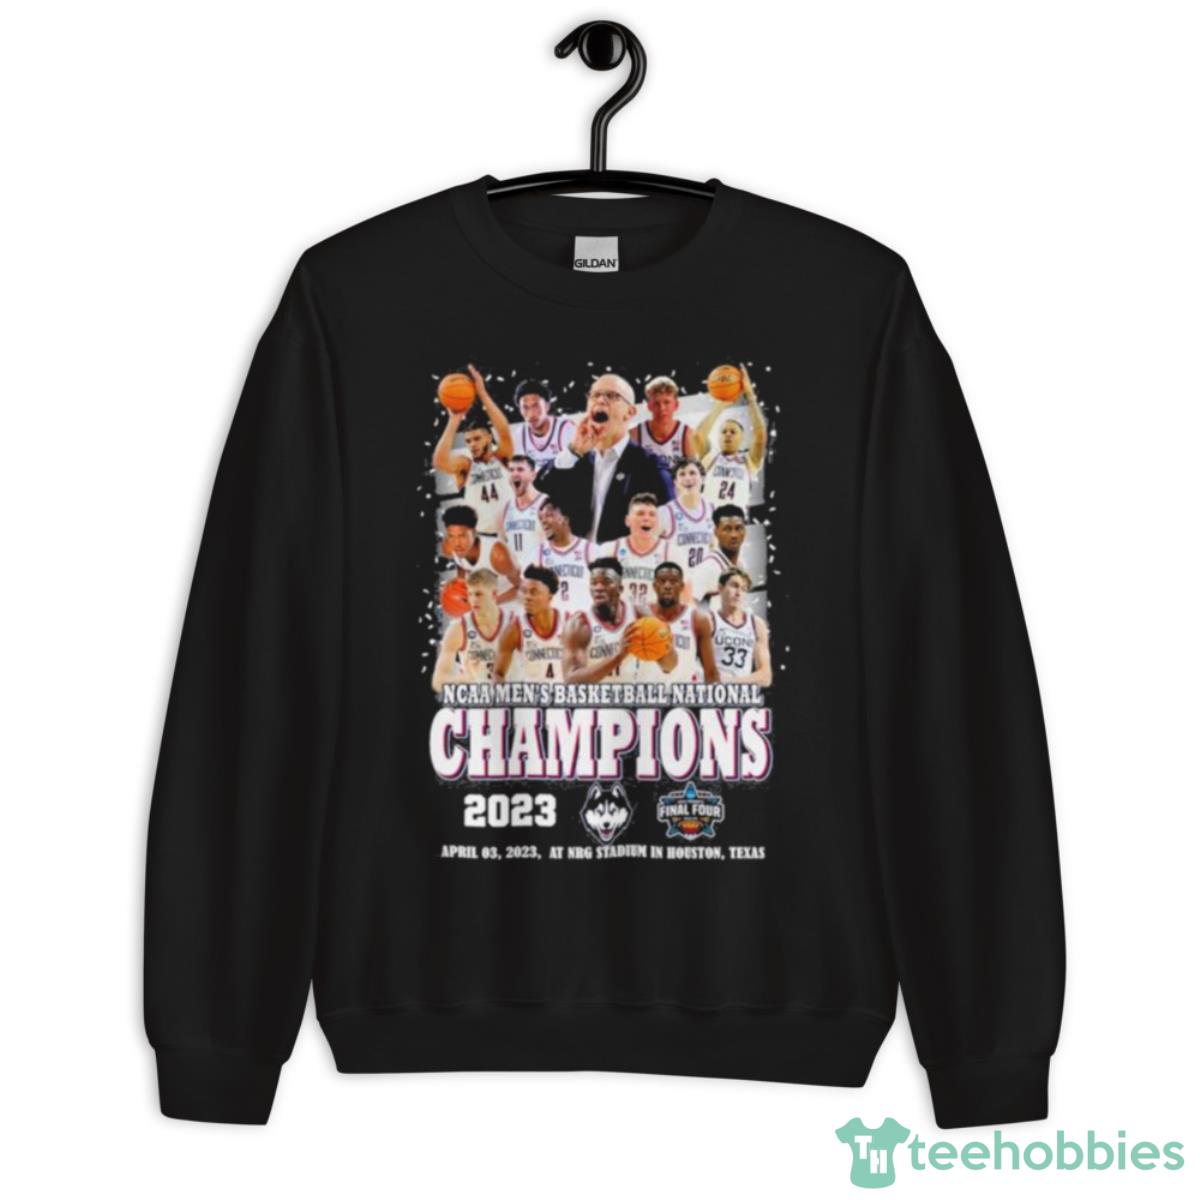 2023 Ncaa Men’s Basketball National Champions Uconn Huskies Teams Shirt - Unisex Crewneck Sweatshirt